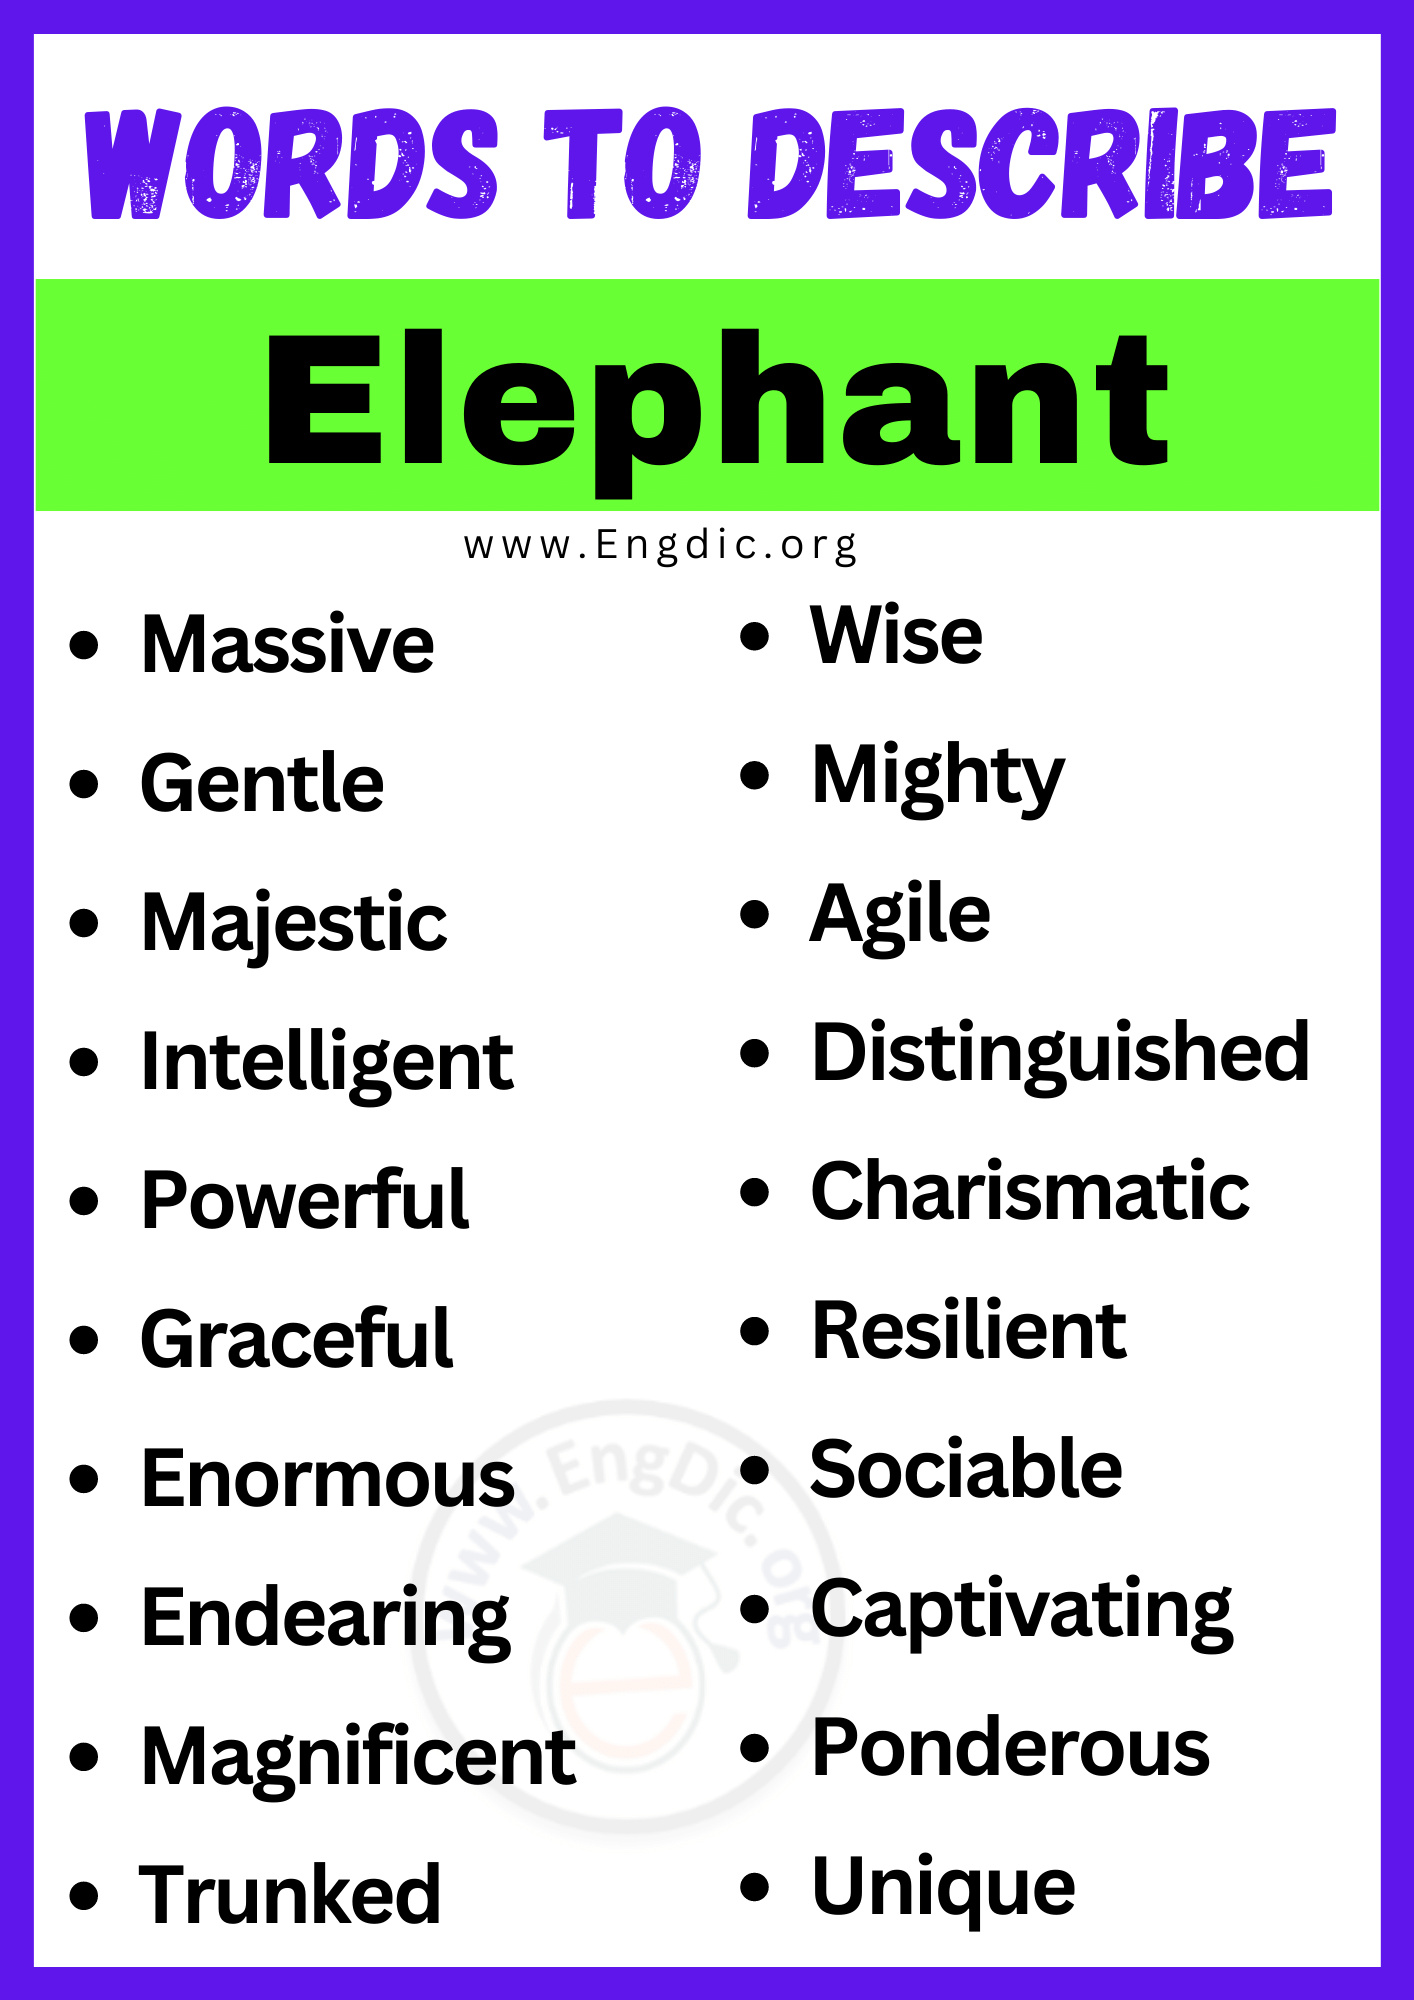 Words to Describe Elephant